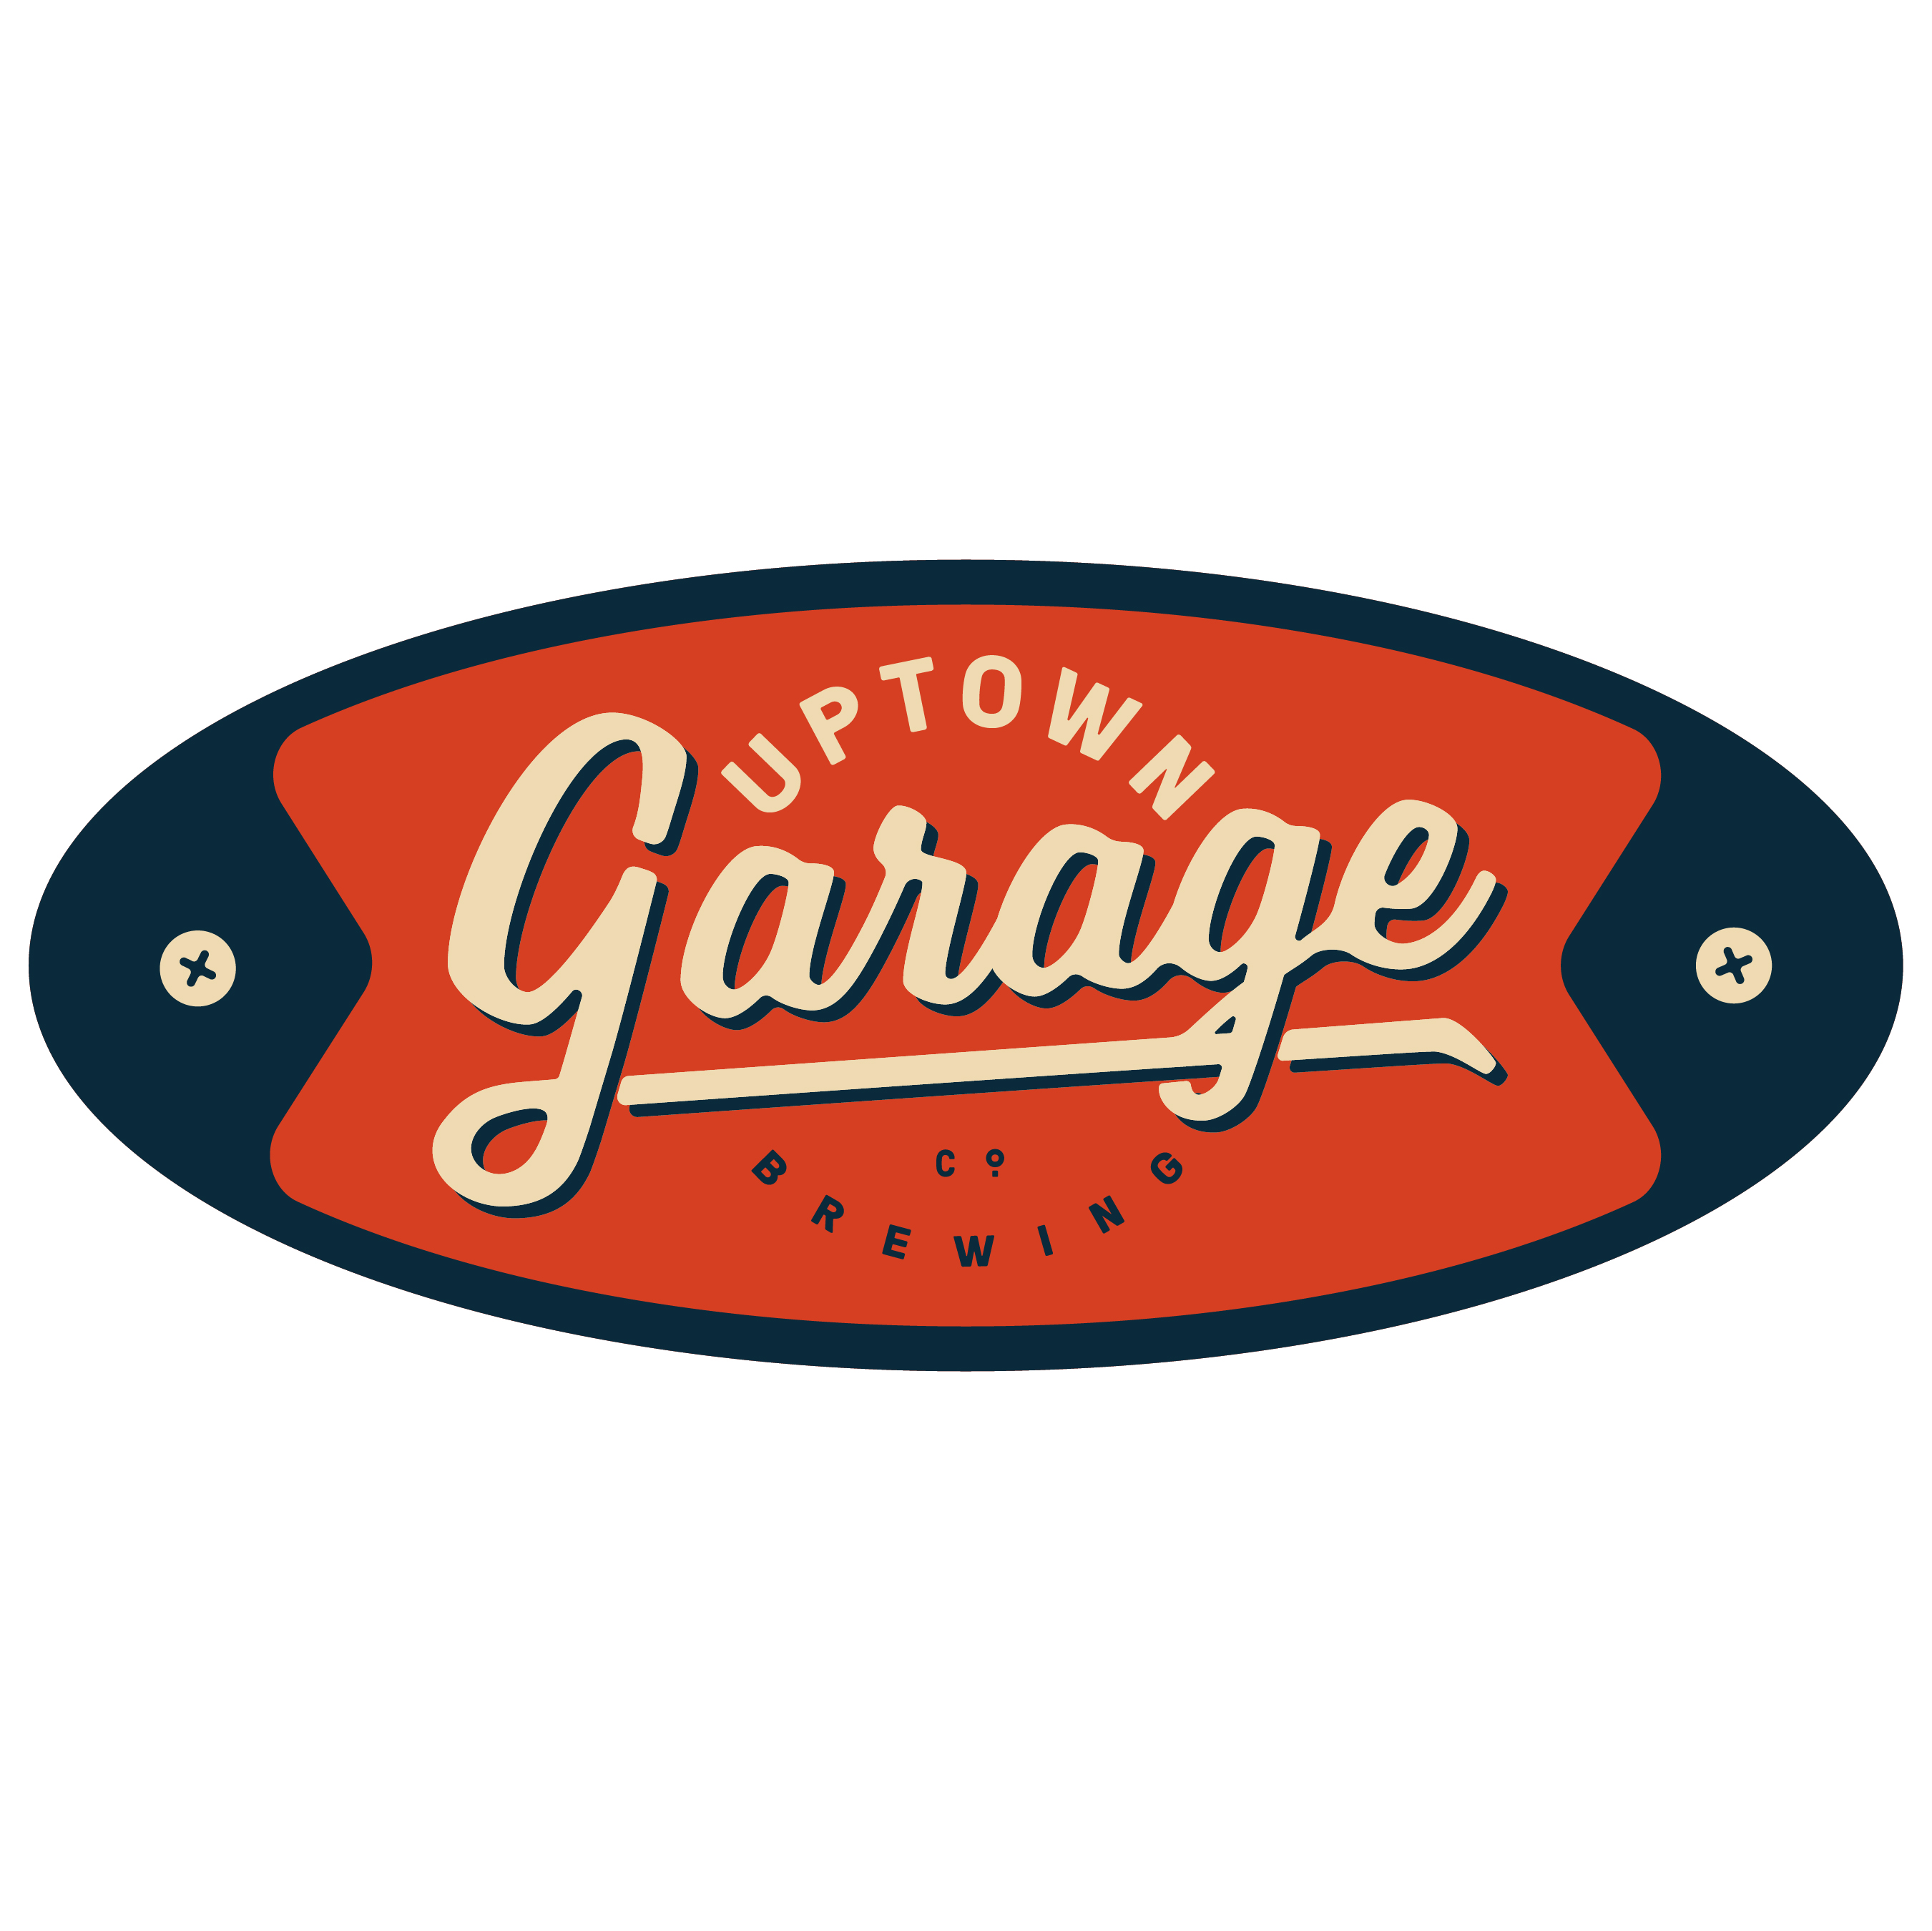 Uptown Garage Brewing Company